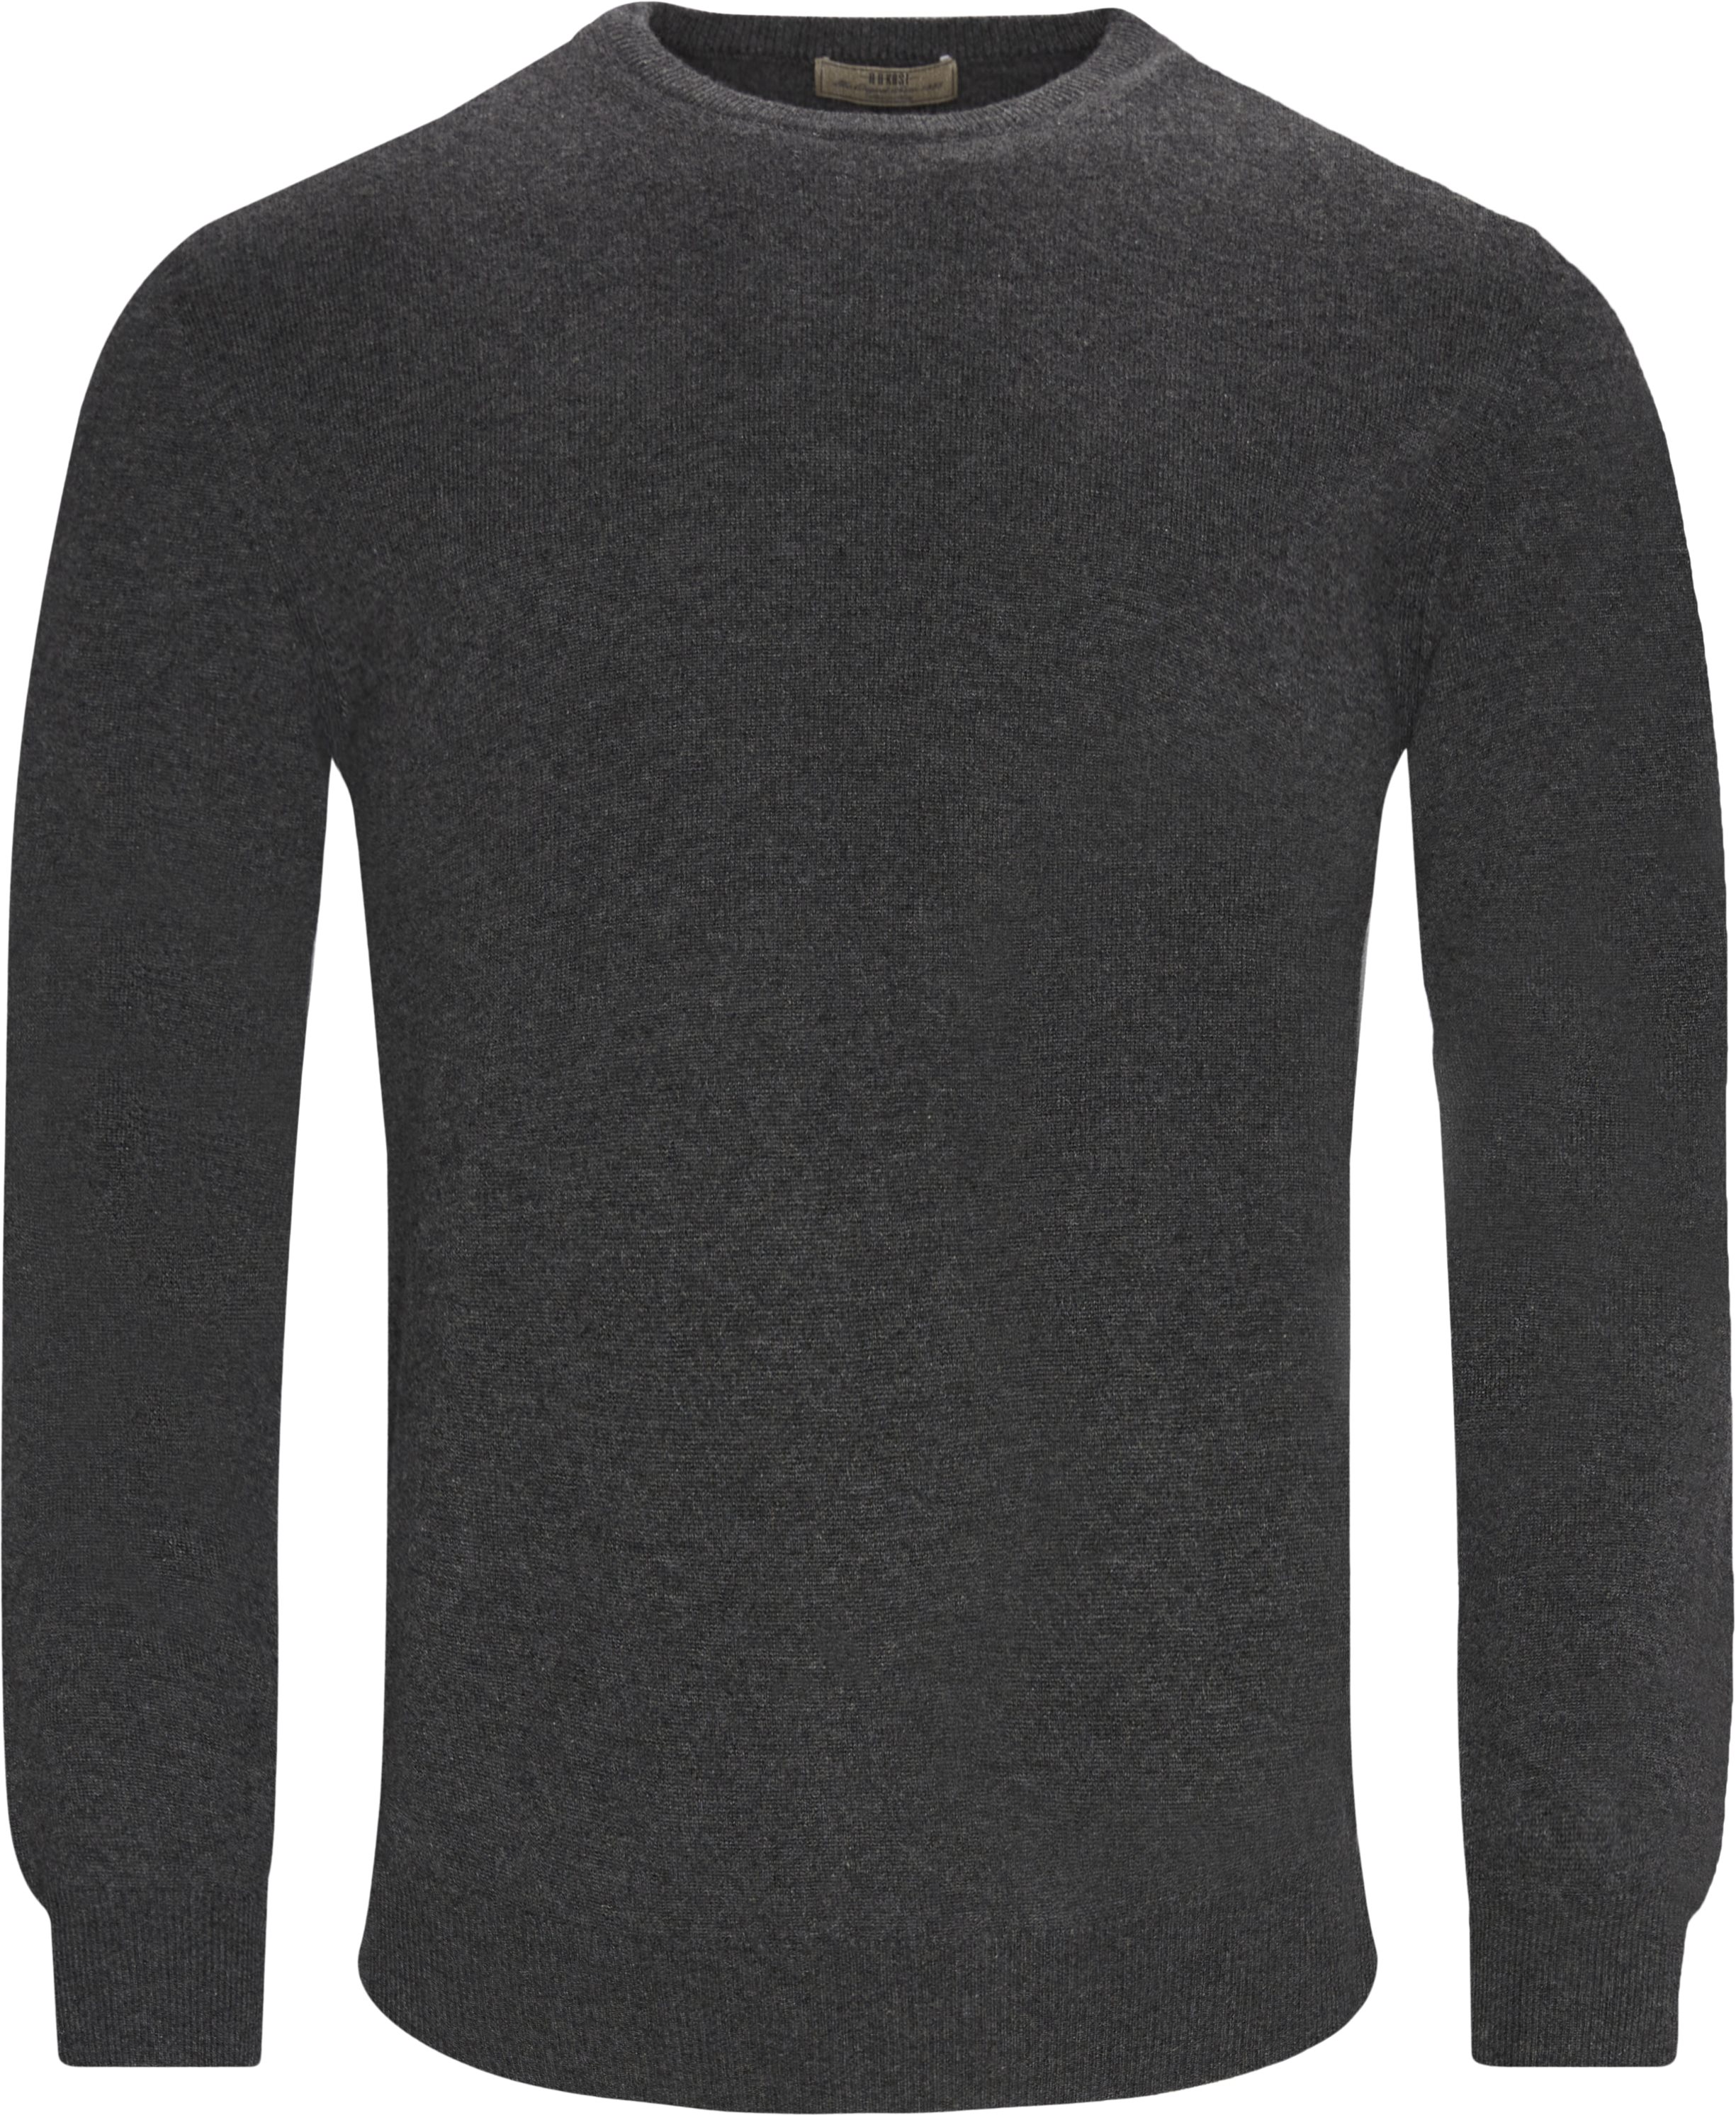 2040 Cashmere Knit - Knitwear - Regular fit - Grey